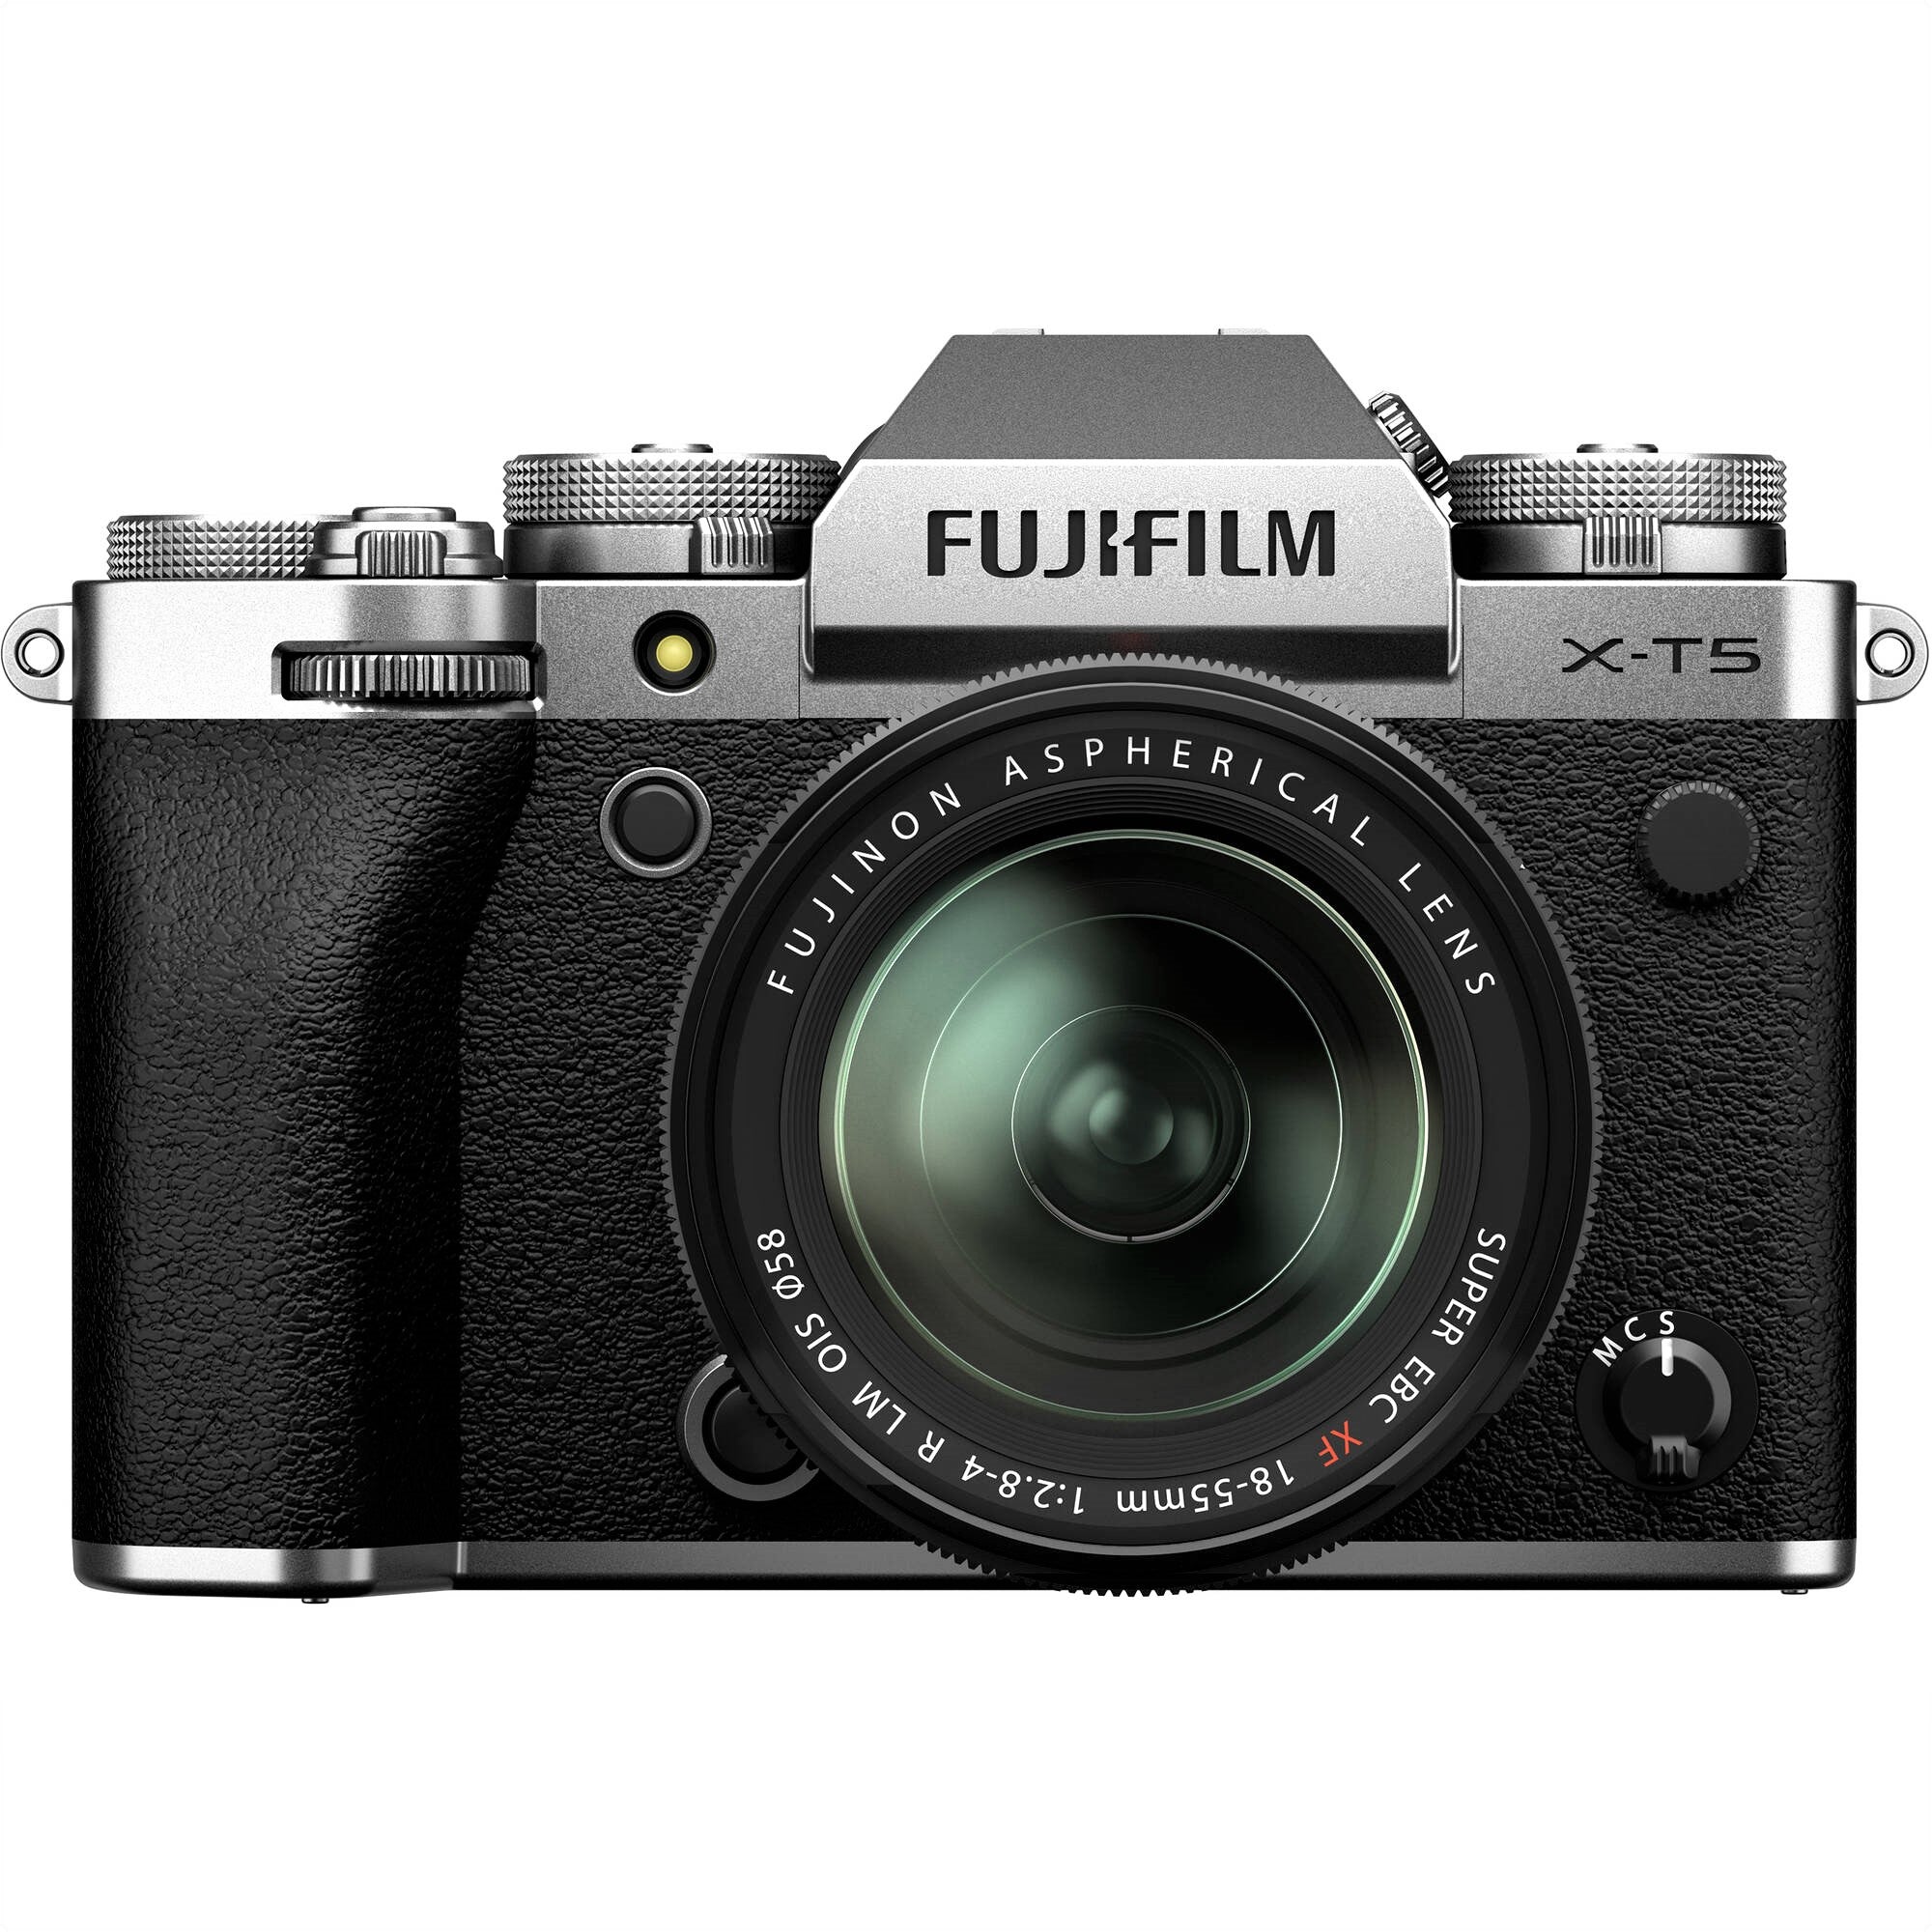 Fujifilm X-T5 Mirrorless Camera with 18-55mm Lens (Black & Silver)